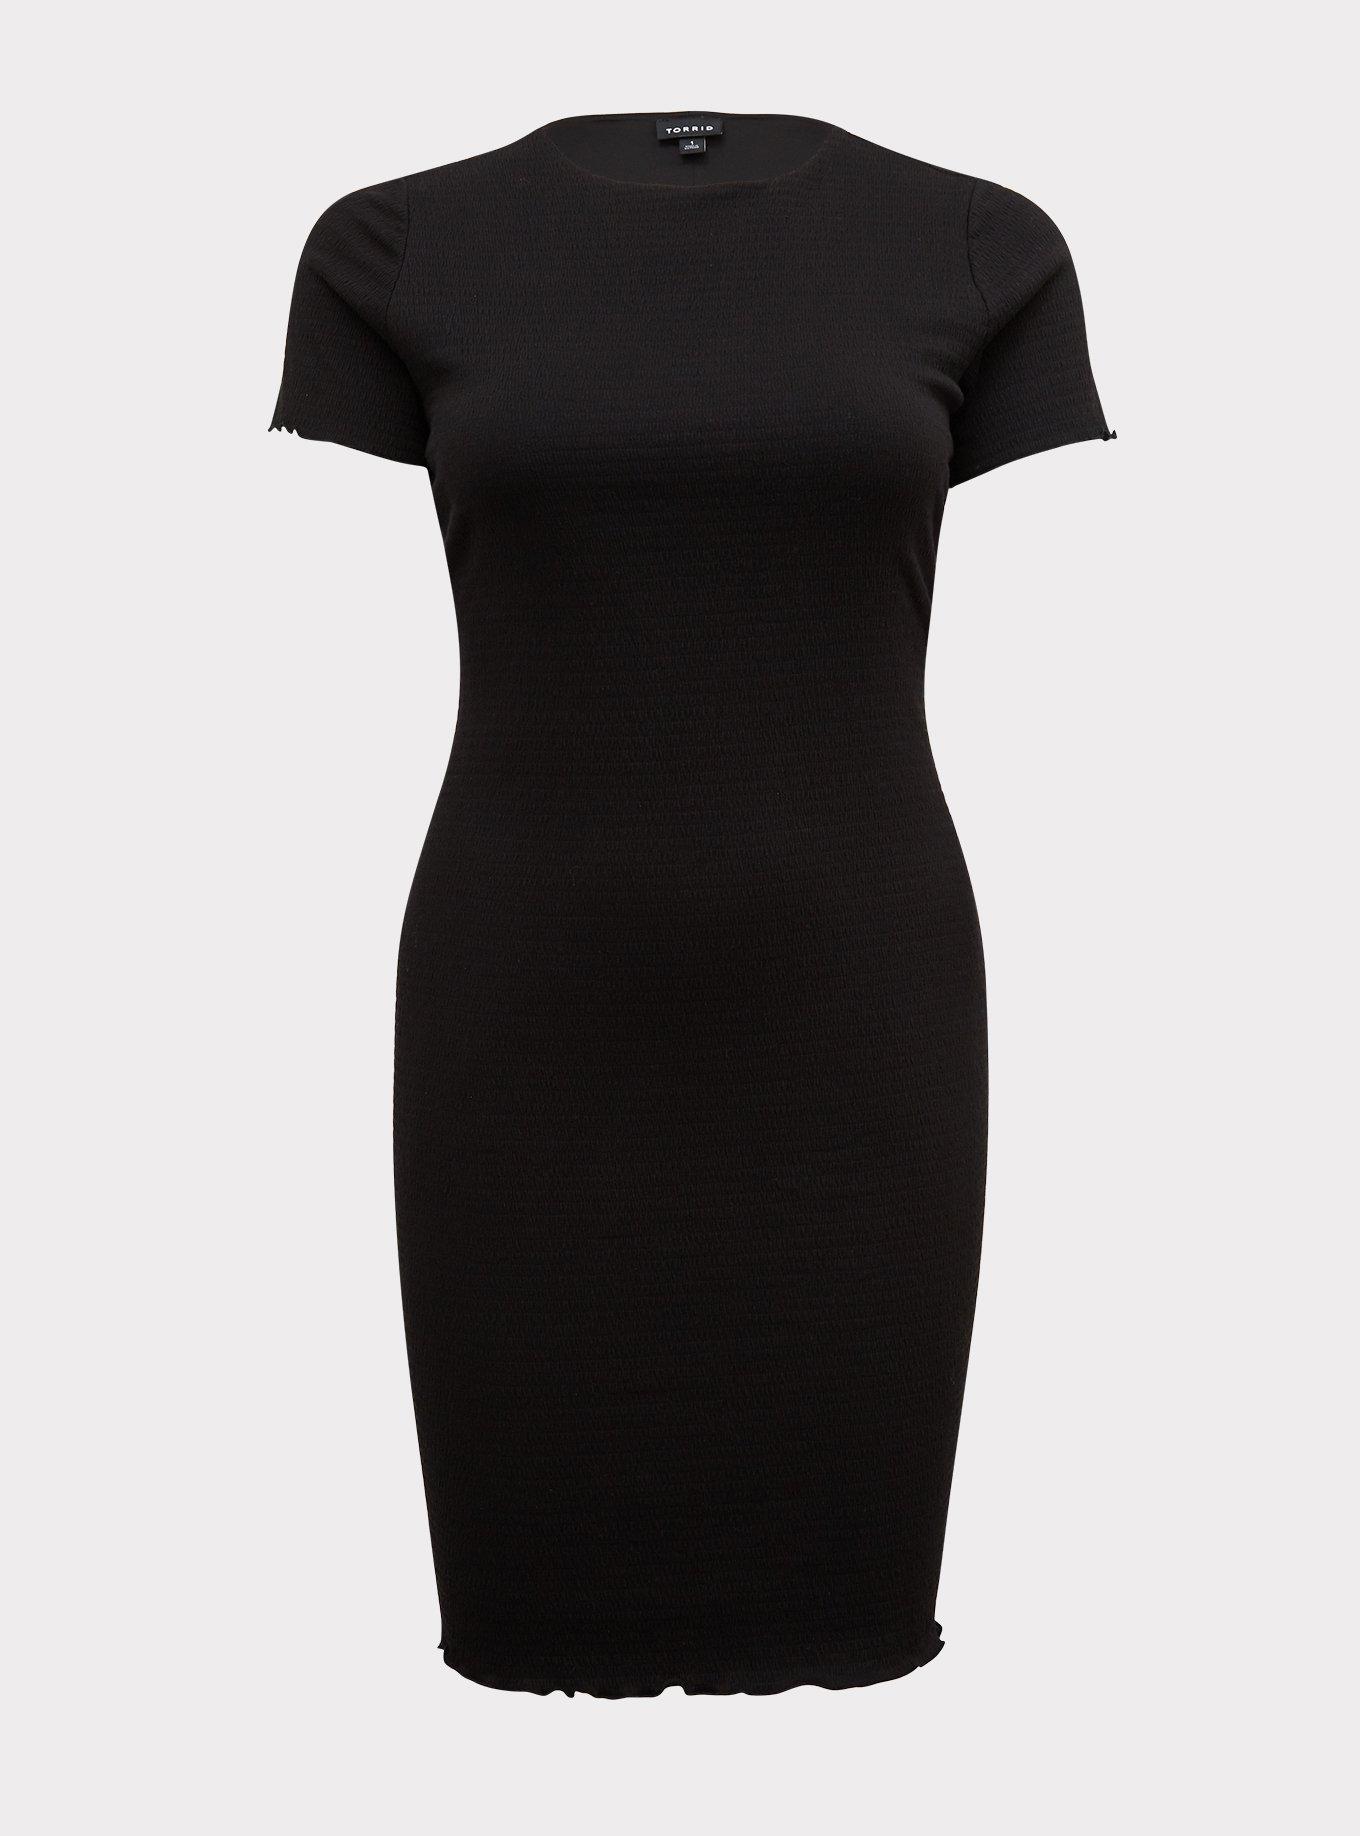 Plus Size - Black Smocked Bodycon Dress - Torrid